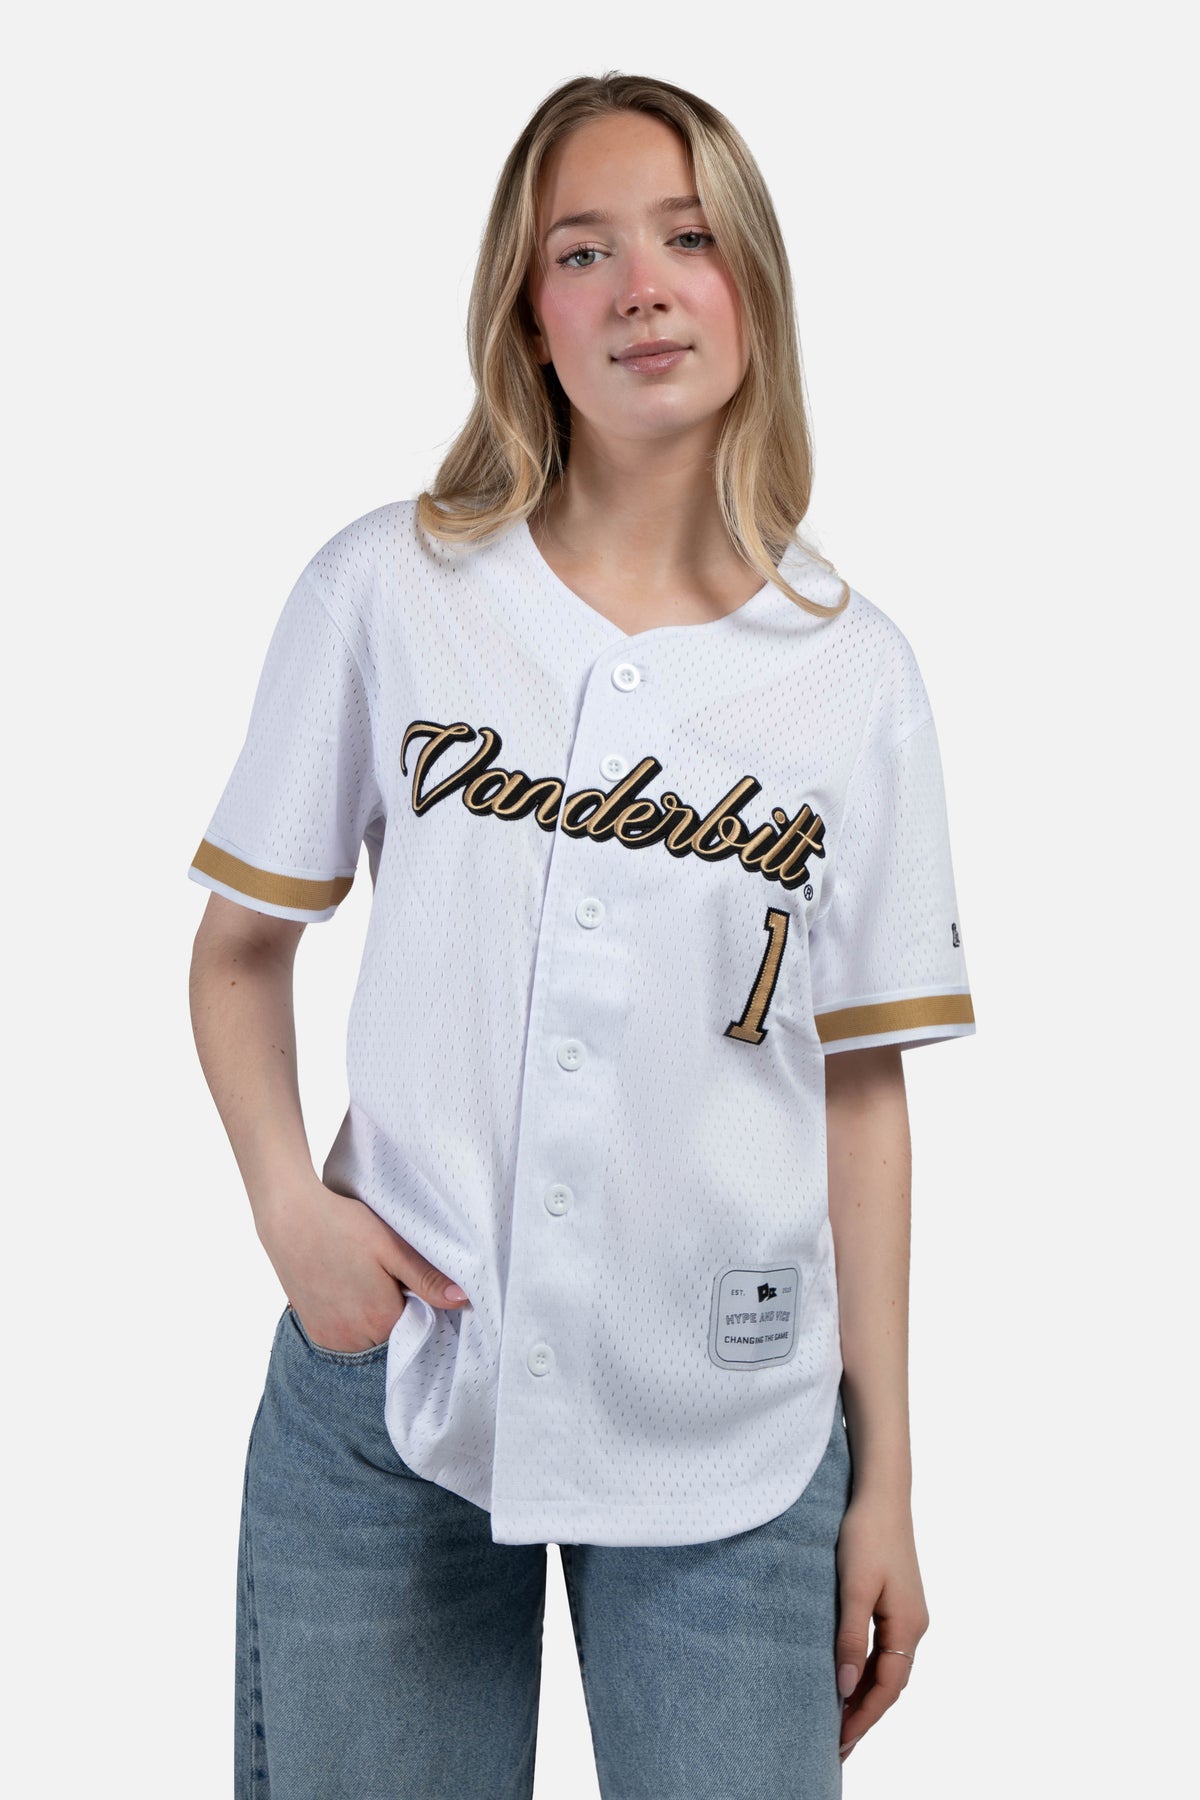 Vanderbilt University Baseball Top